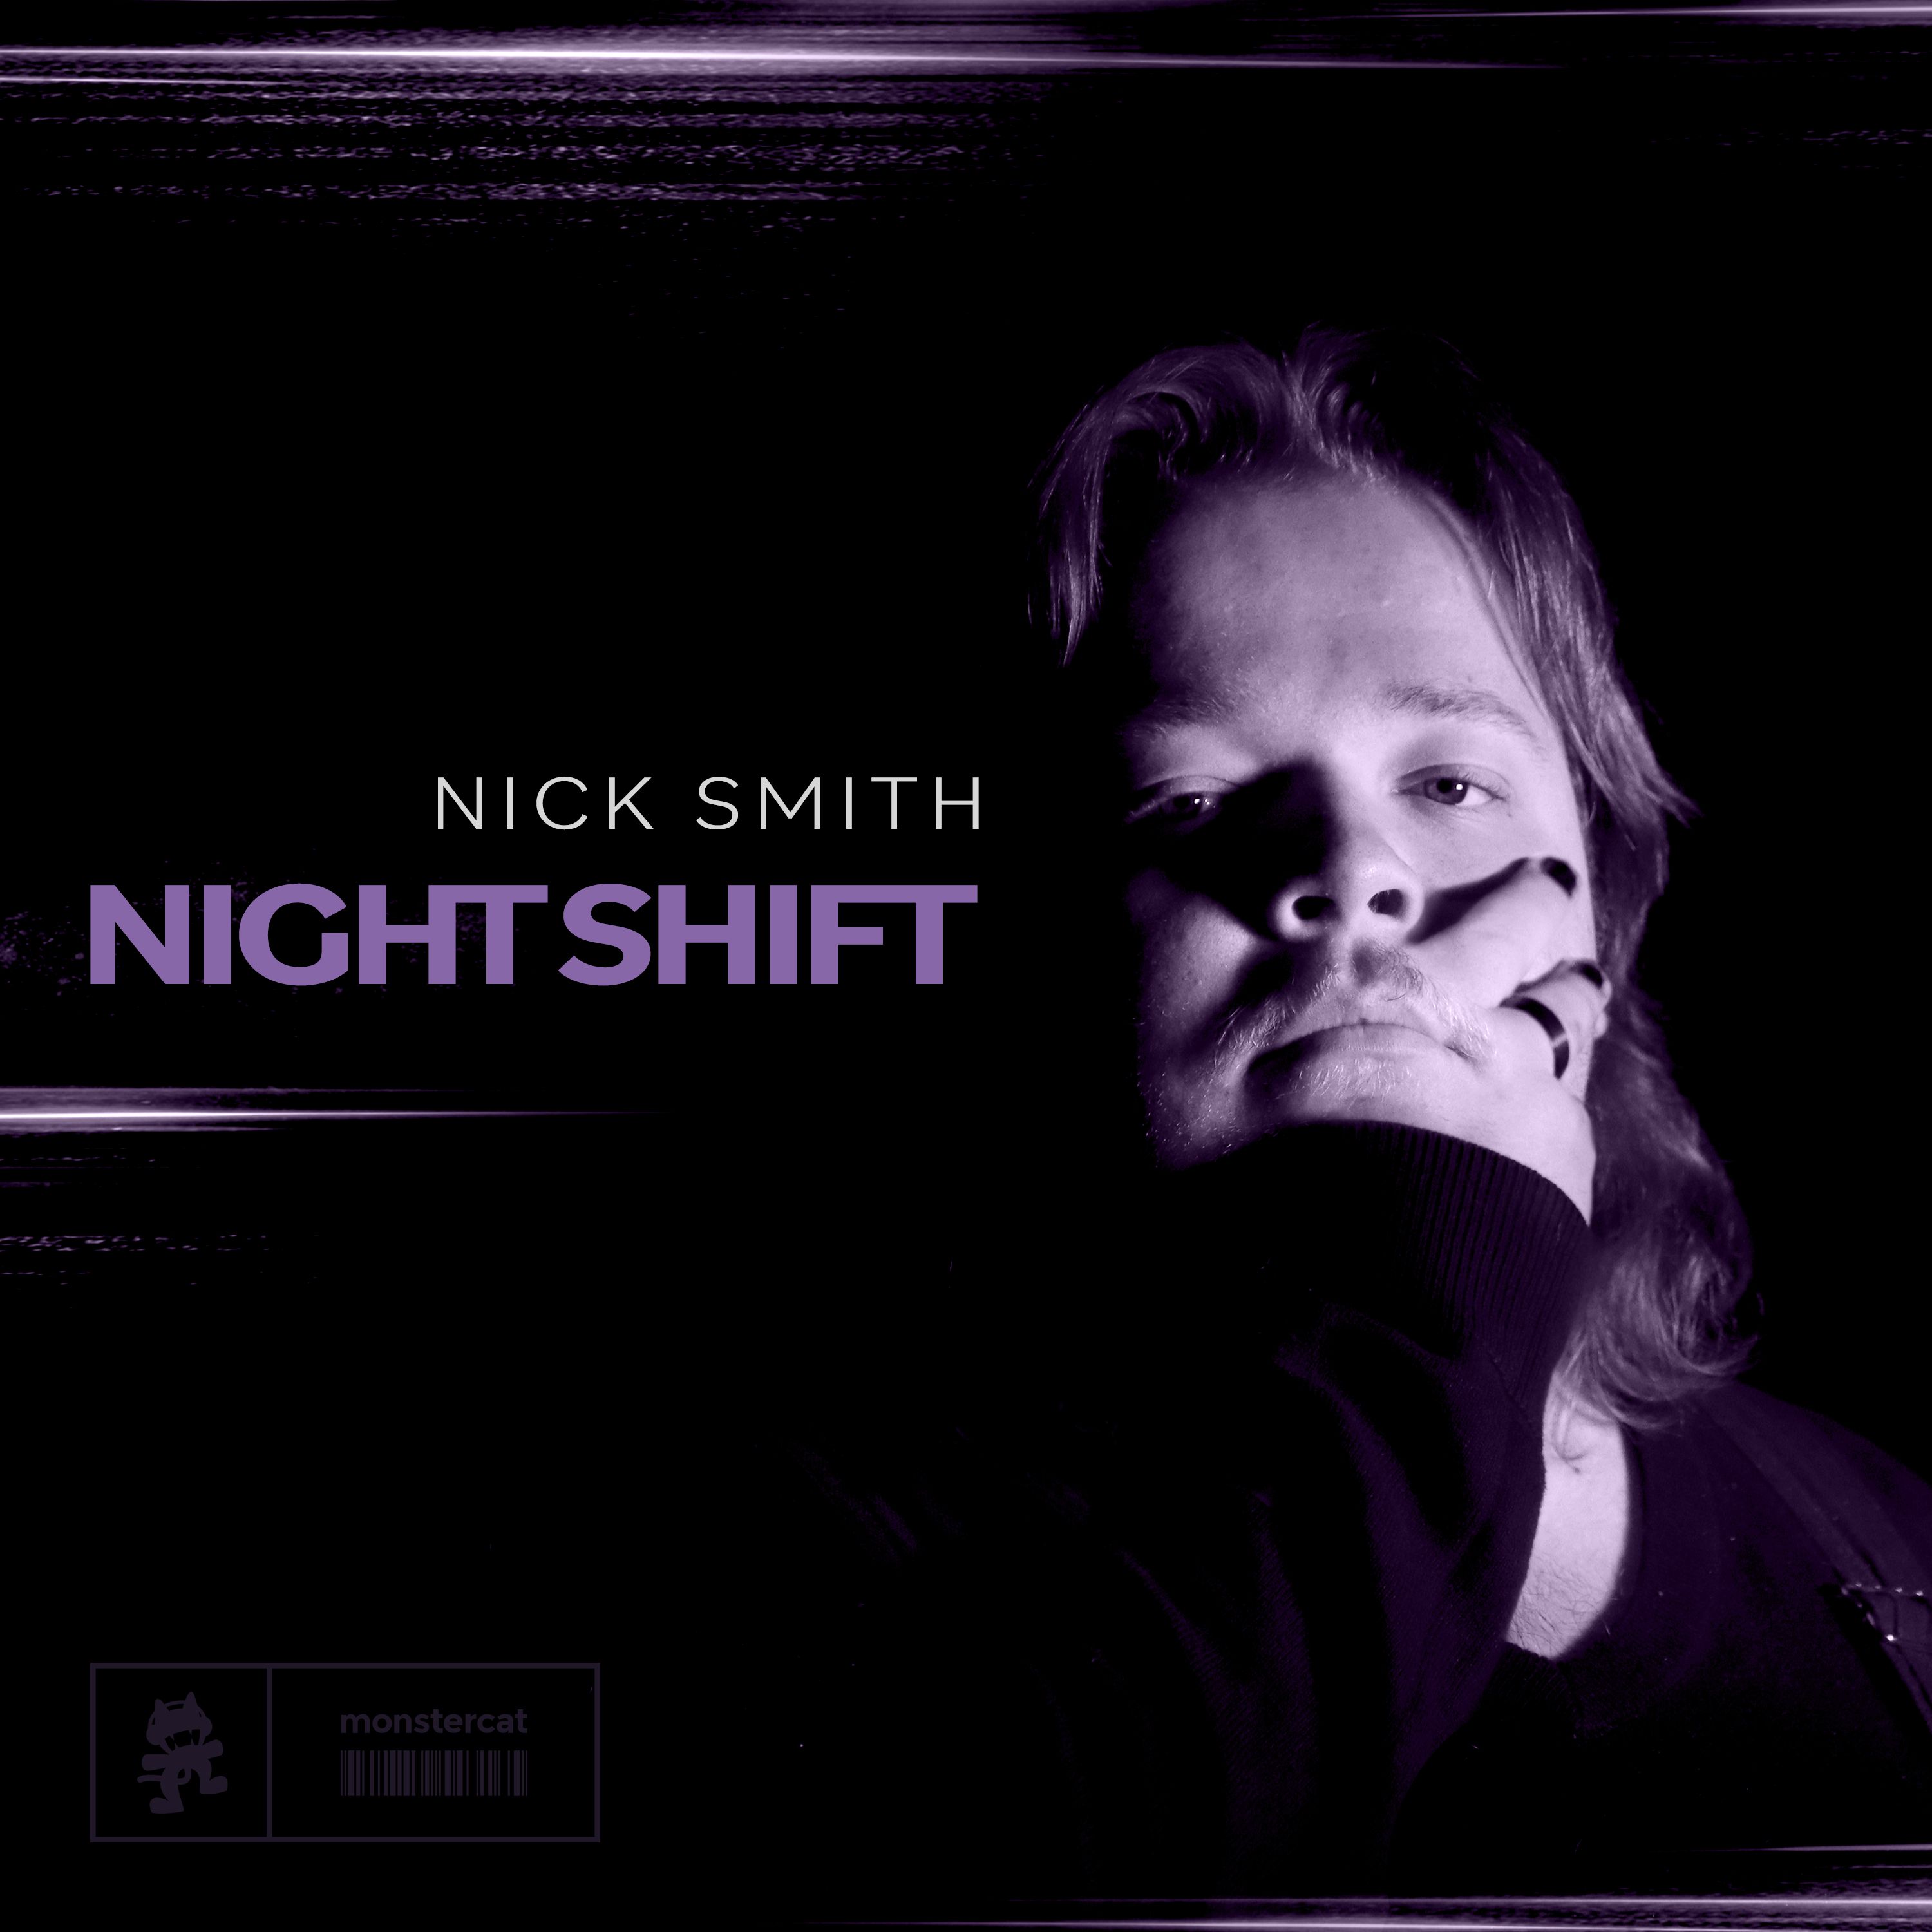 Night shift feels 👻 : r/Nightshift